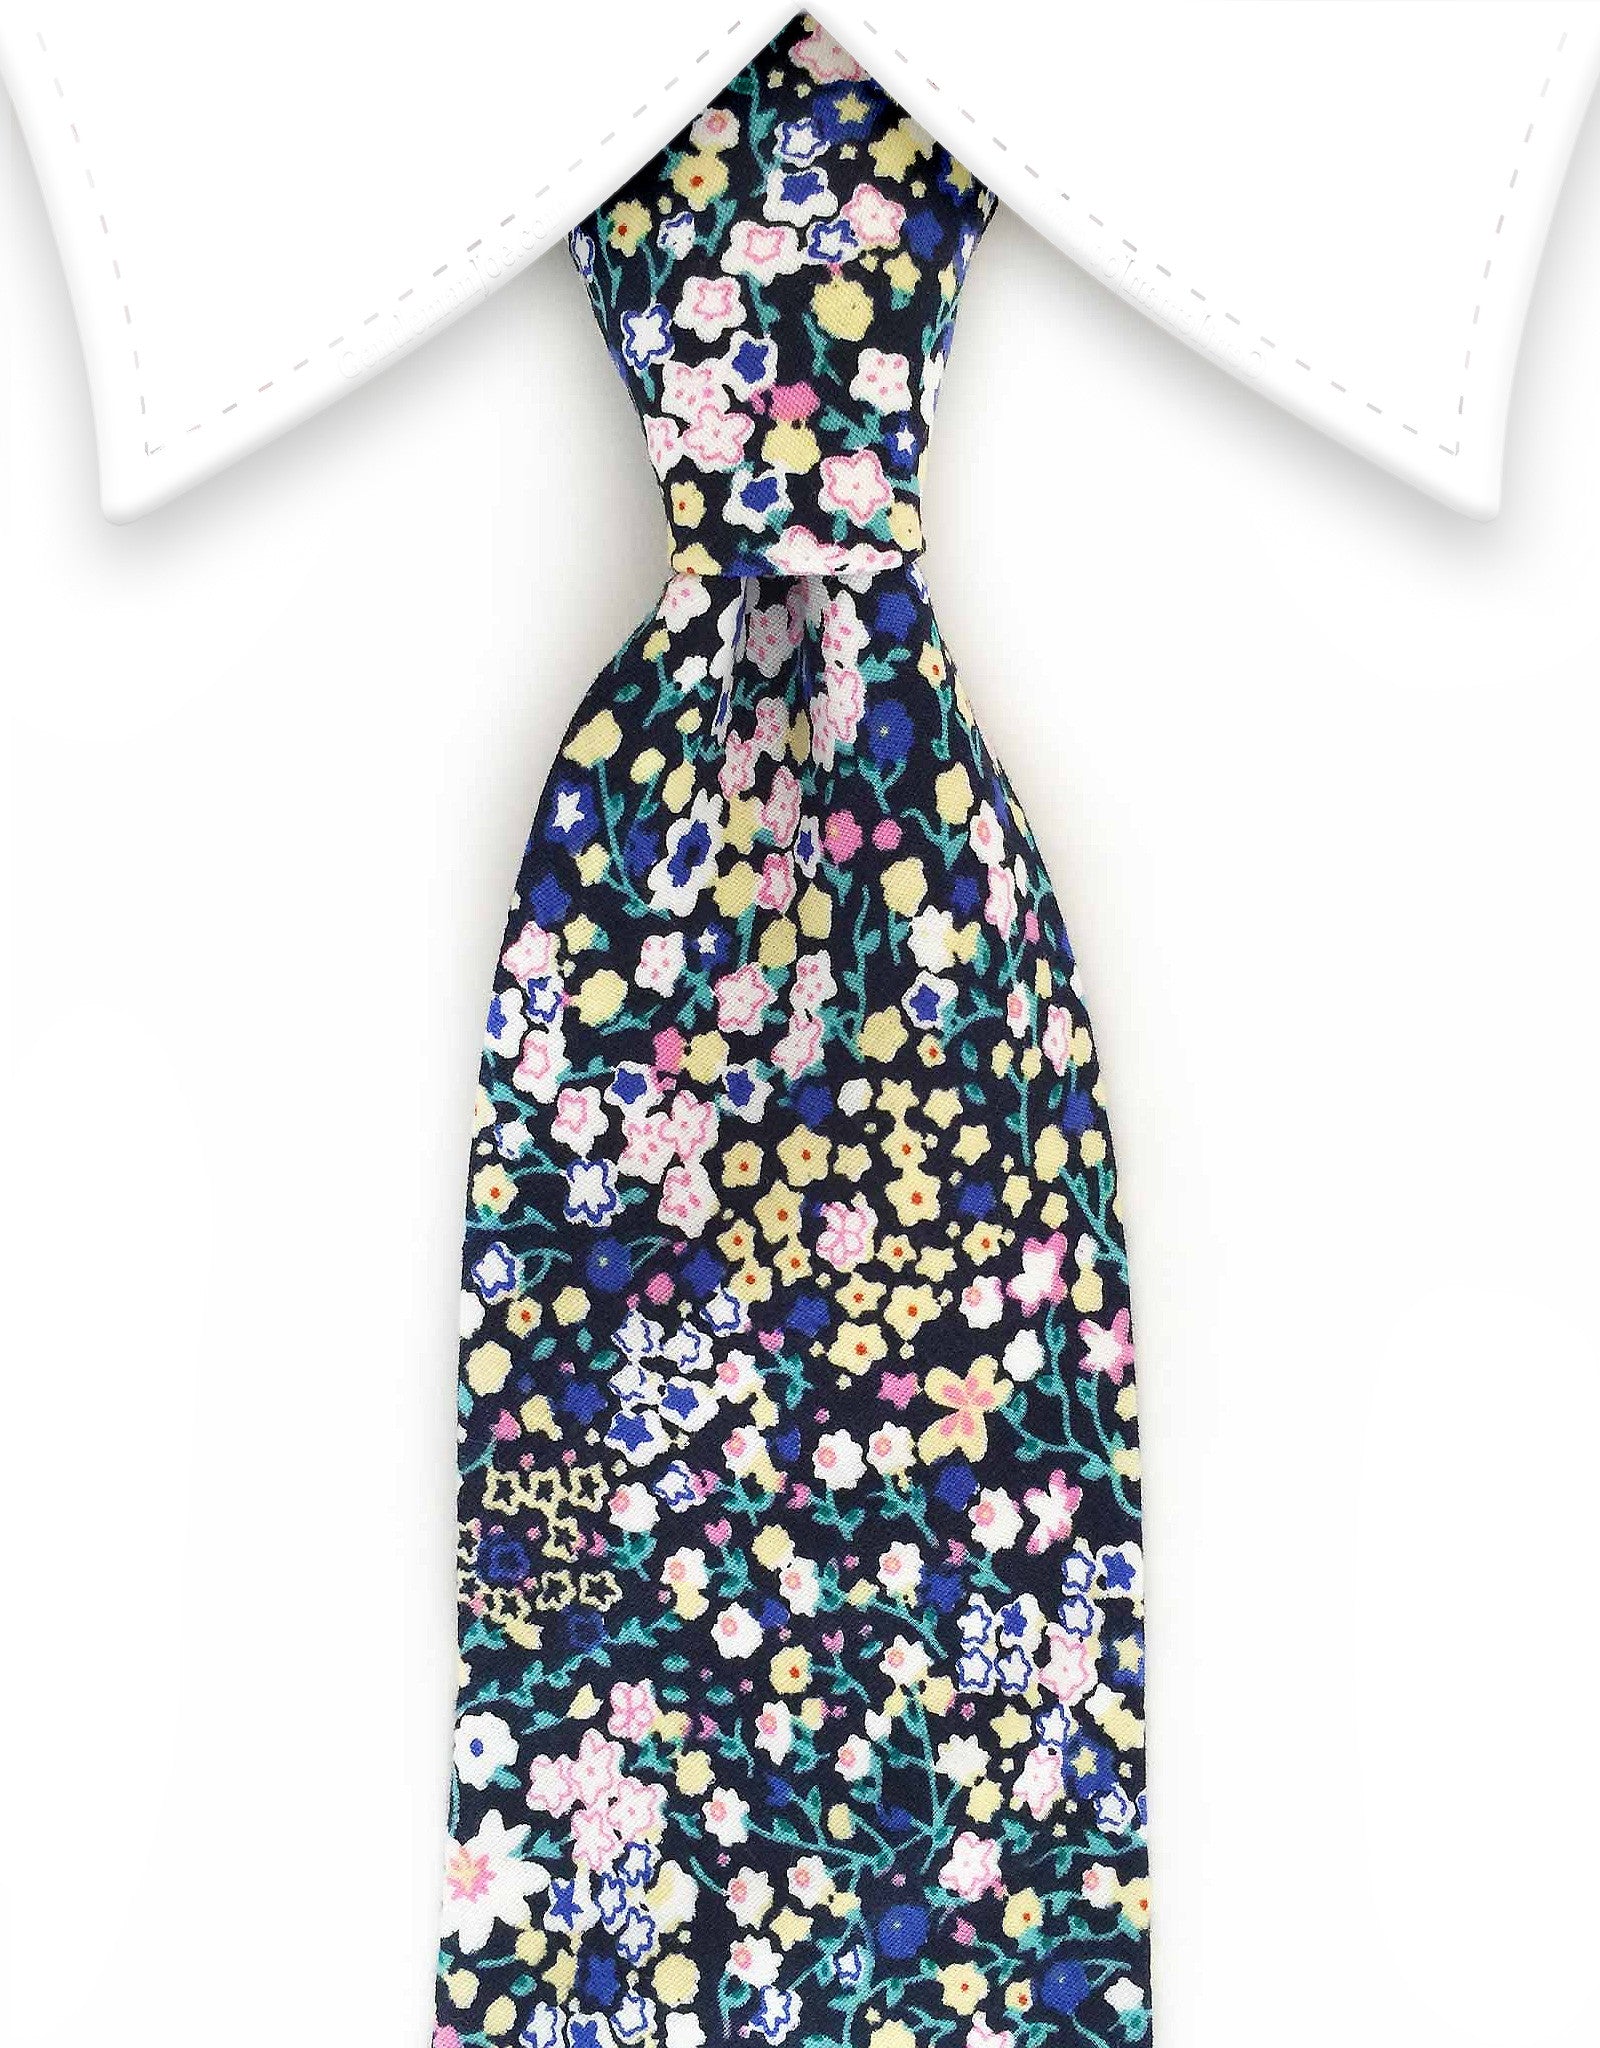 Mini yellow, white, pink, blue floral tie